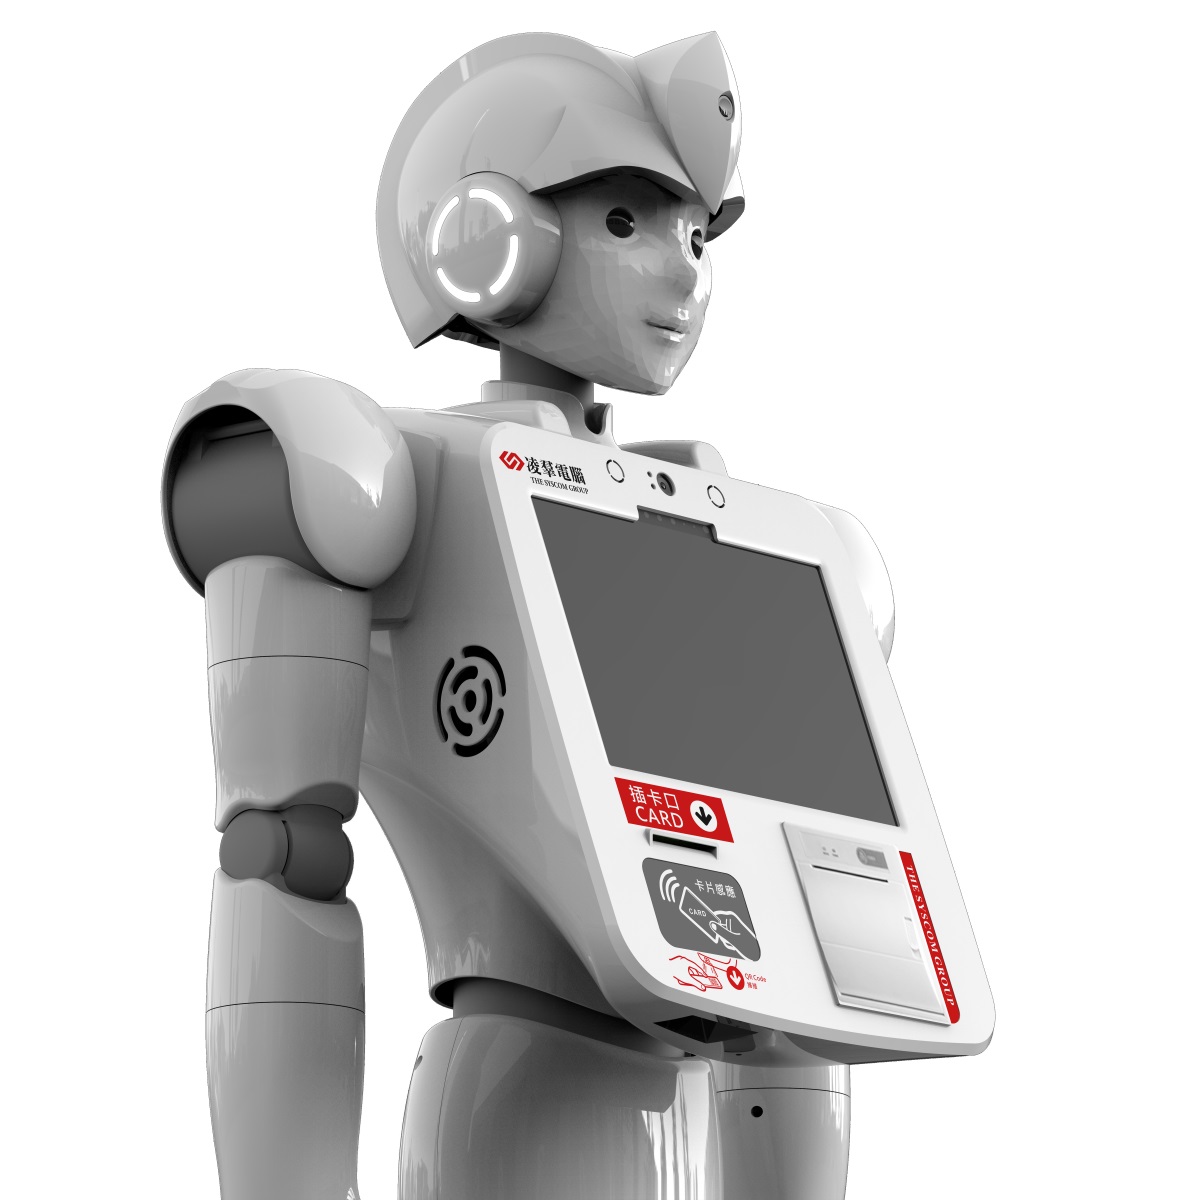 Ayuda - Service Robot -SYSCOM Computer Engineering Co.